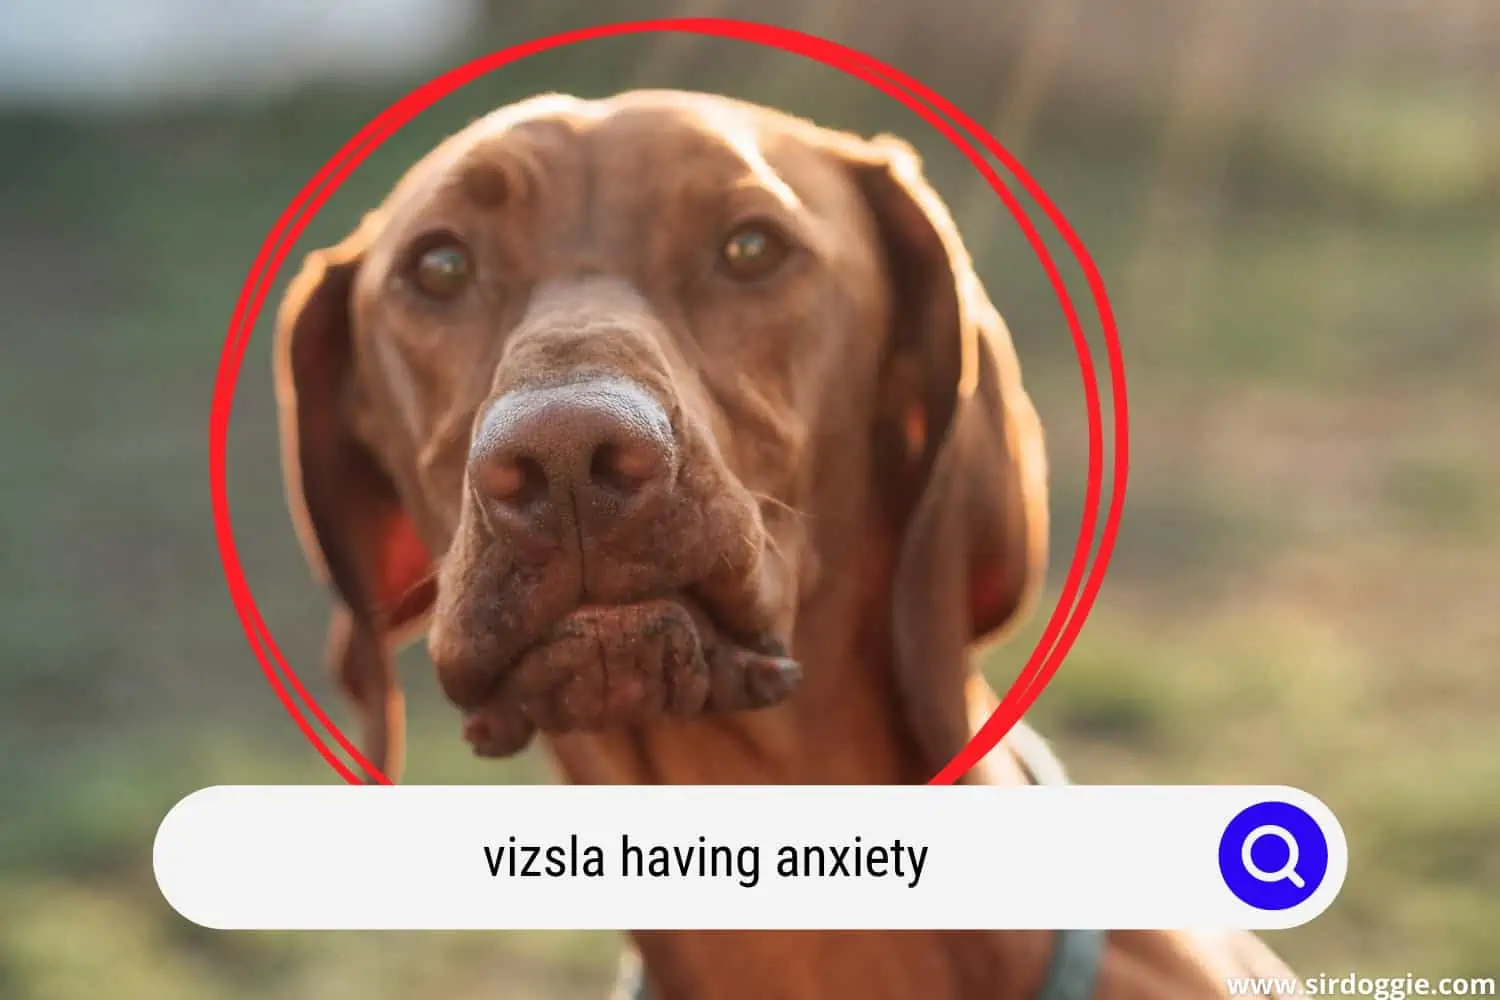 A Vizsla dog with anxiety